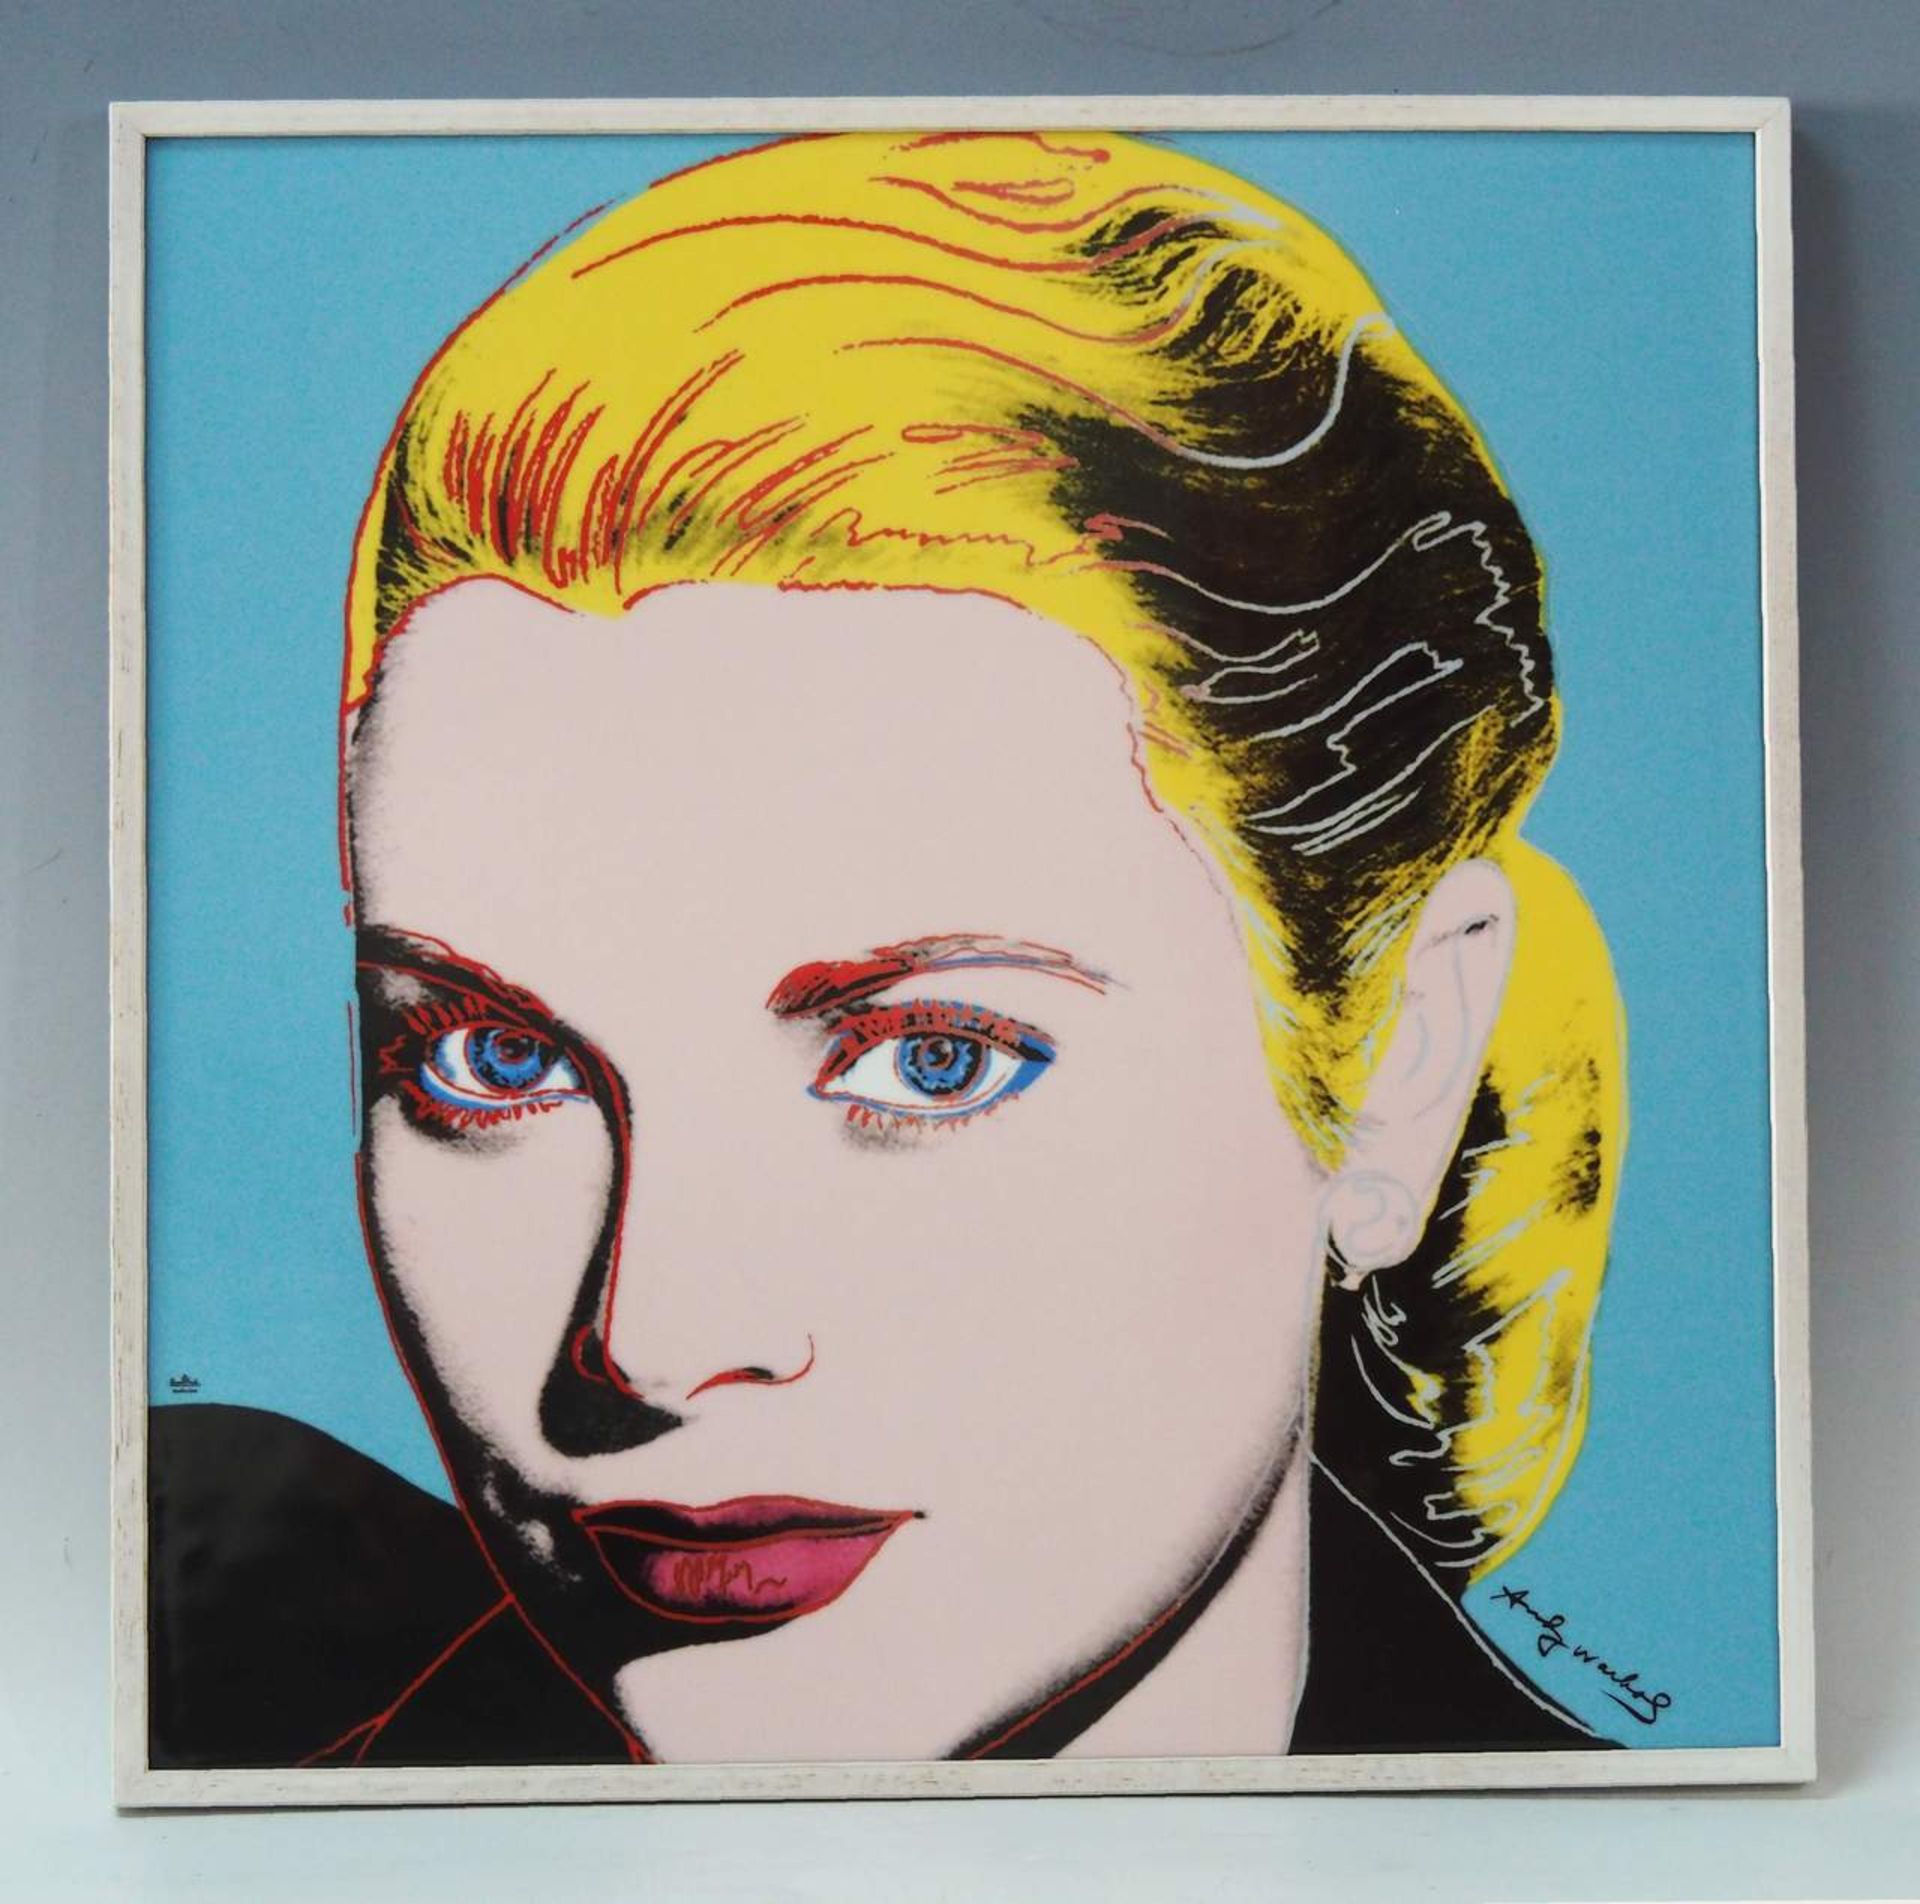 Nach ANDY WARHOL (1928 - 1987). Wandbild Porzellankachel Grace Kelly "Light Blue". - Bild 3 aus 11